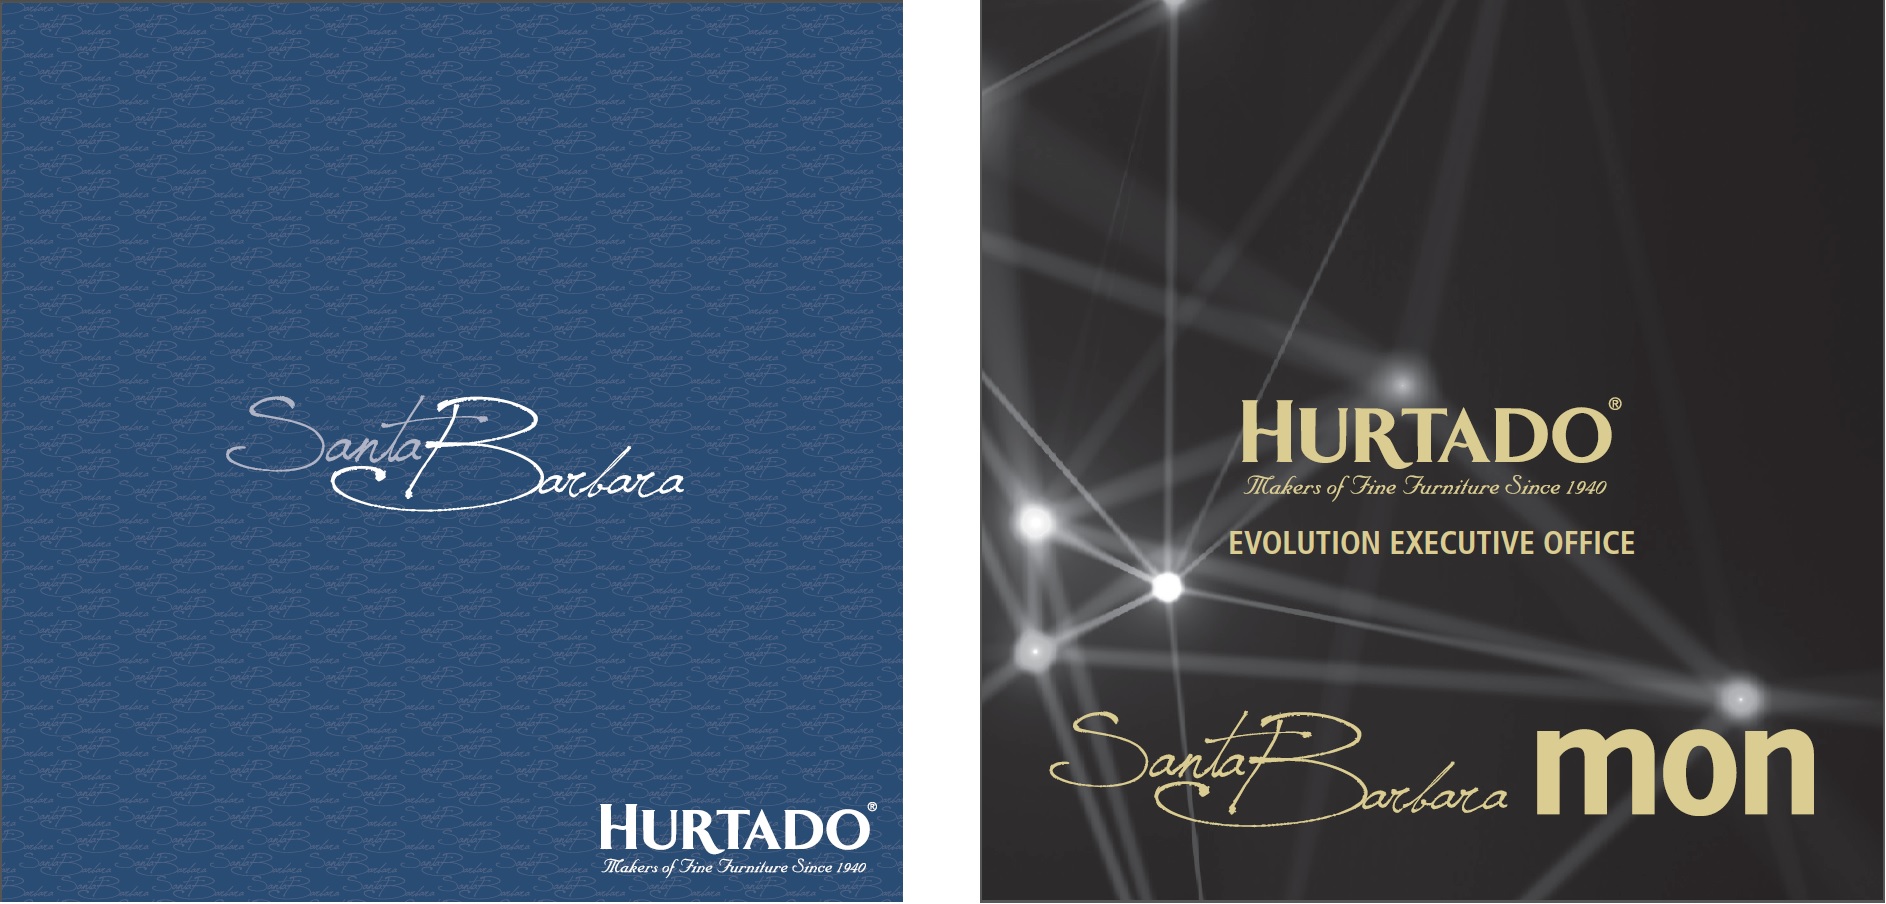 Hurtado Muebles presents two new catalogs